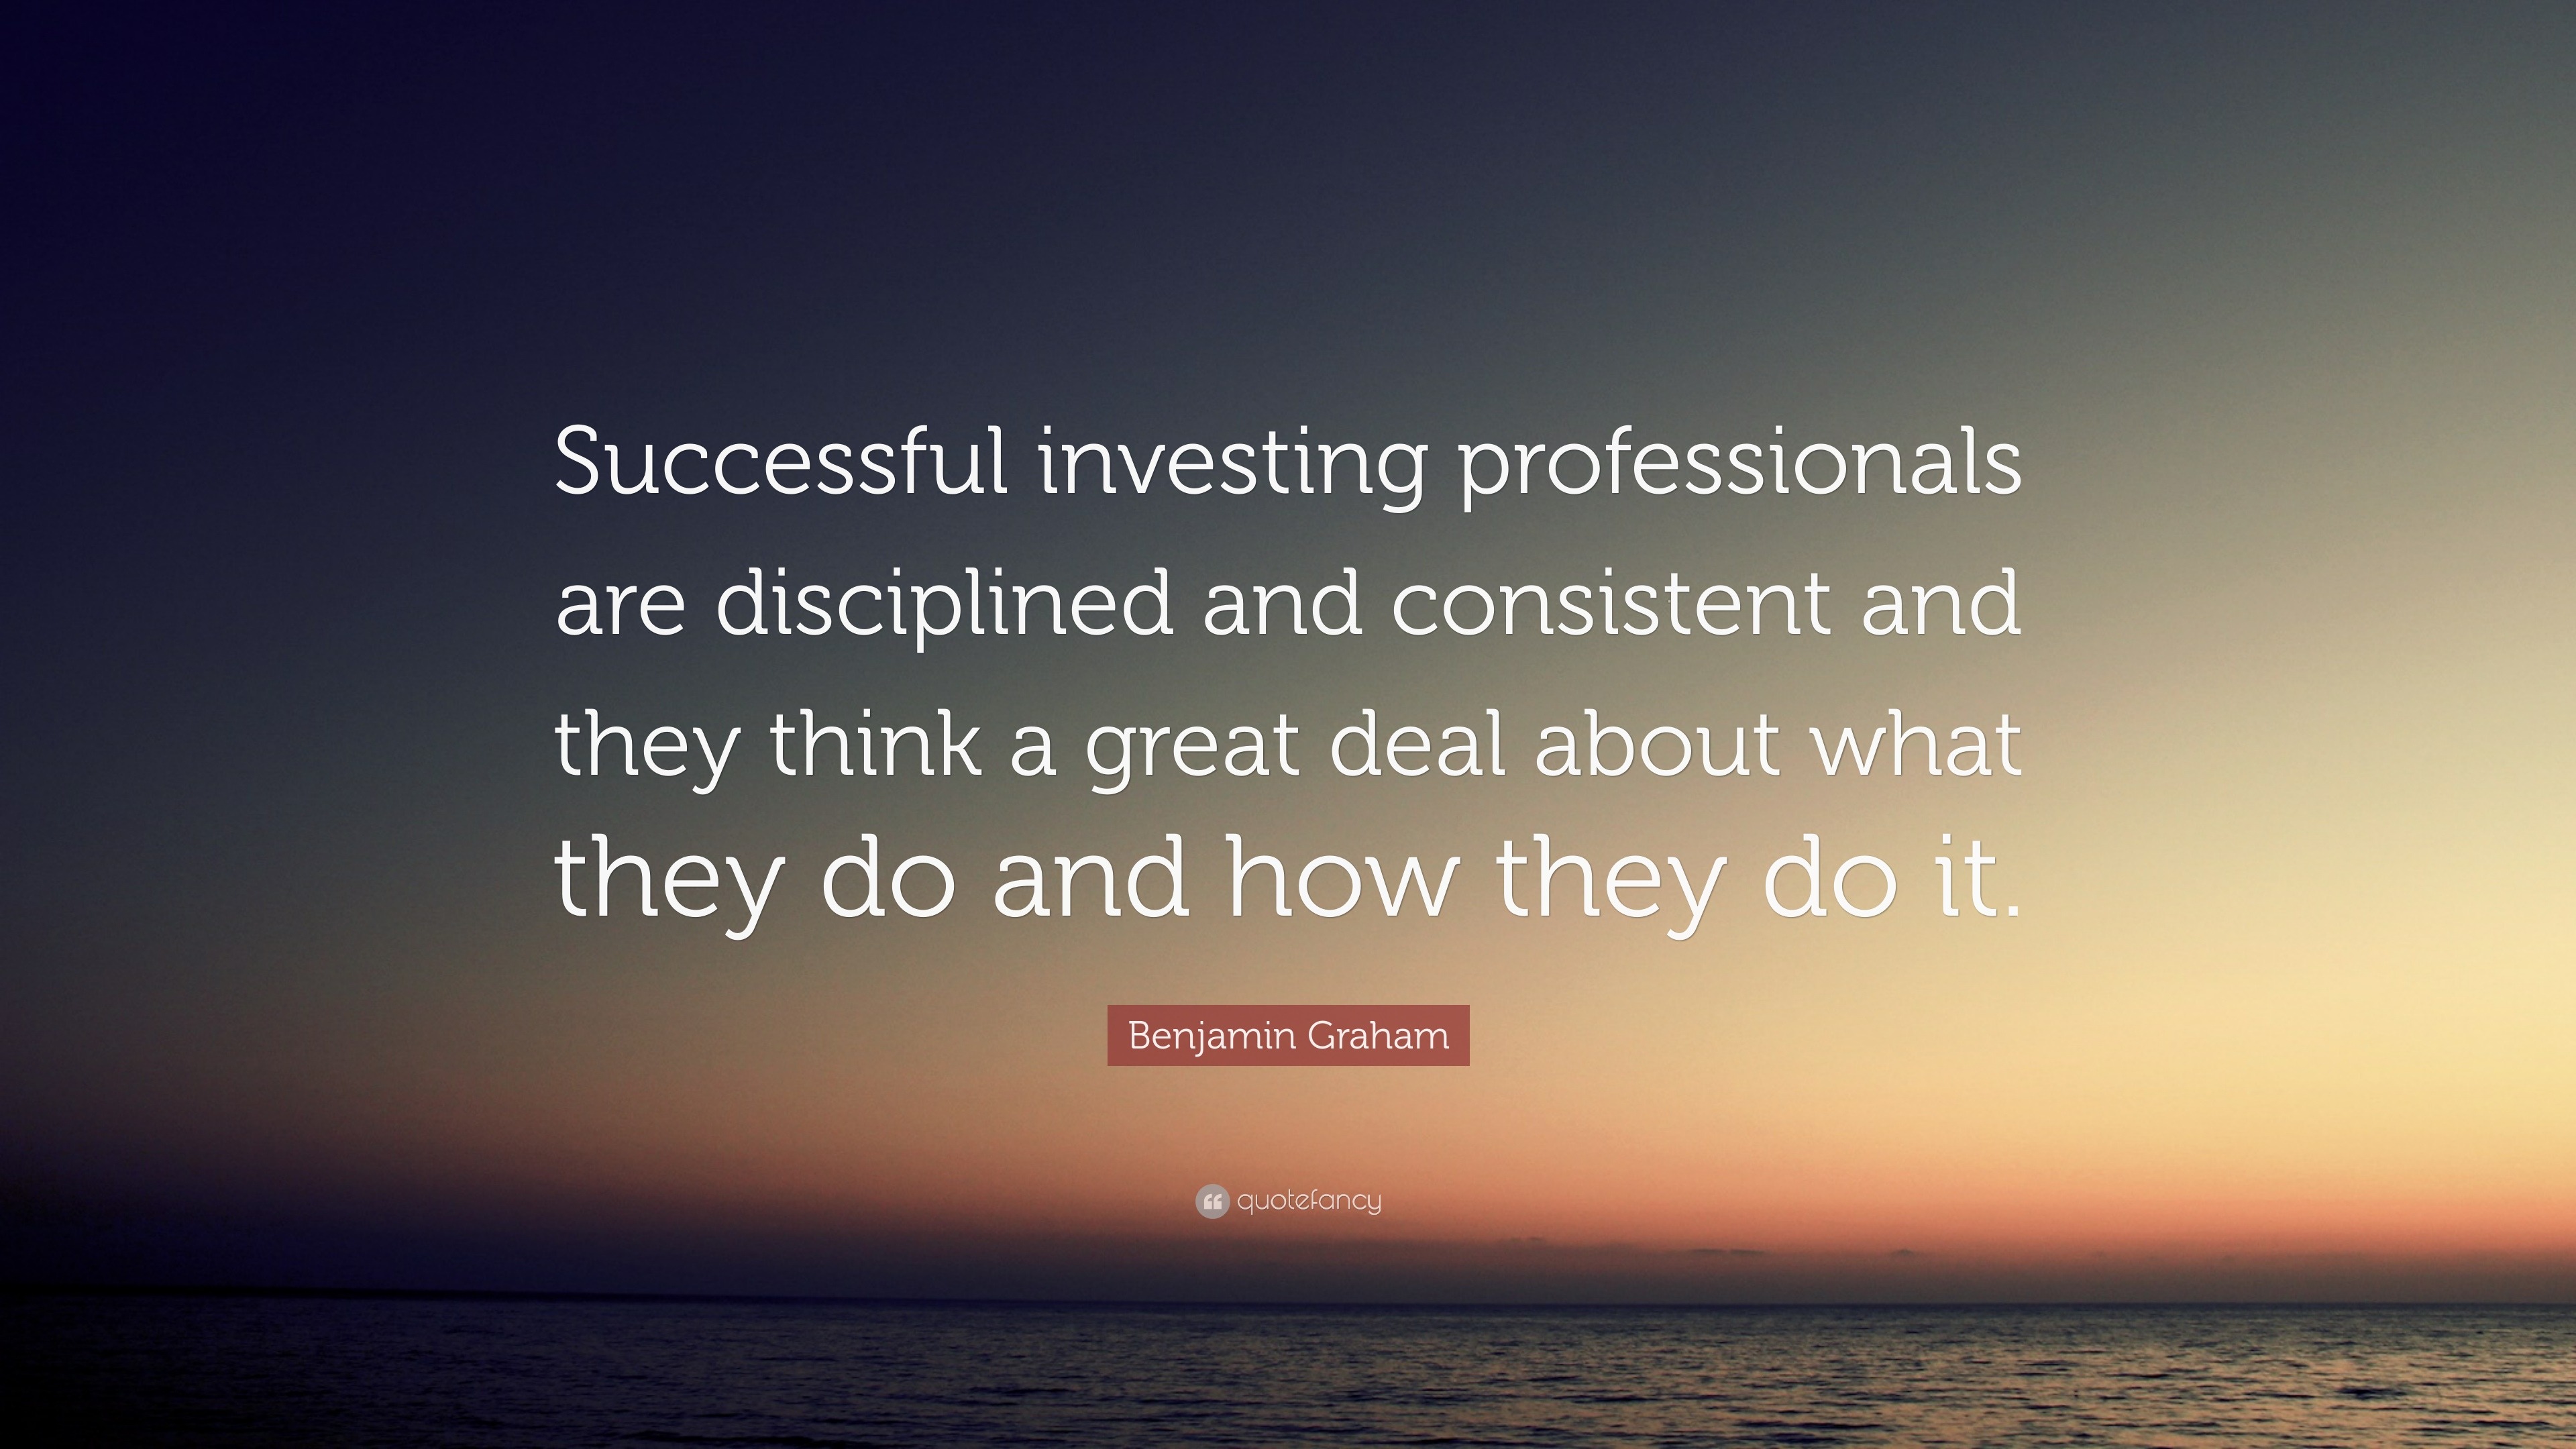 Benjamin Graham Quotes on Investing (SUCCESS) - Gracious Quotes